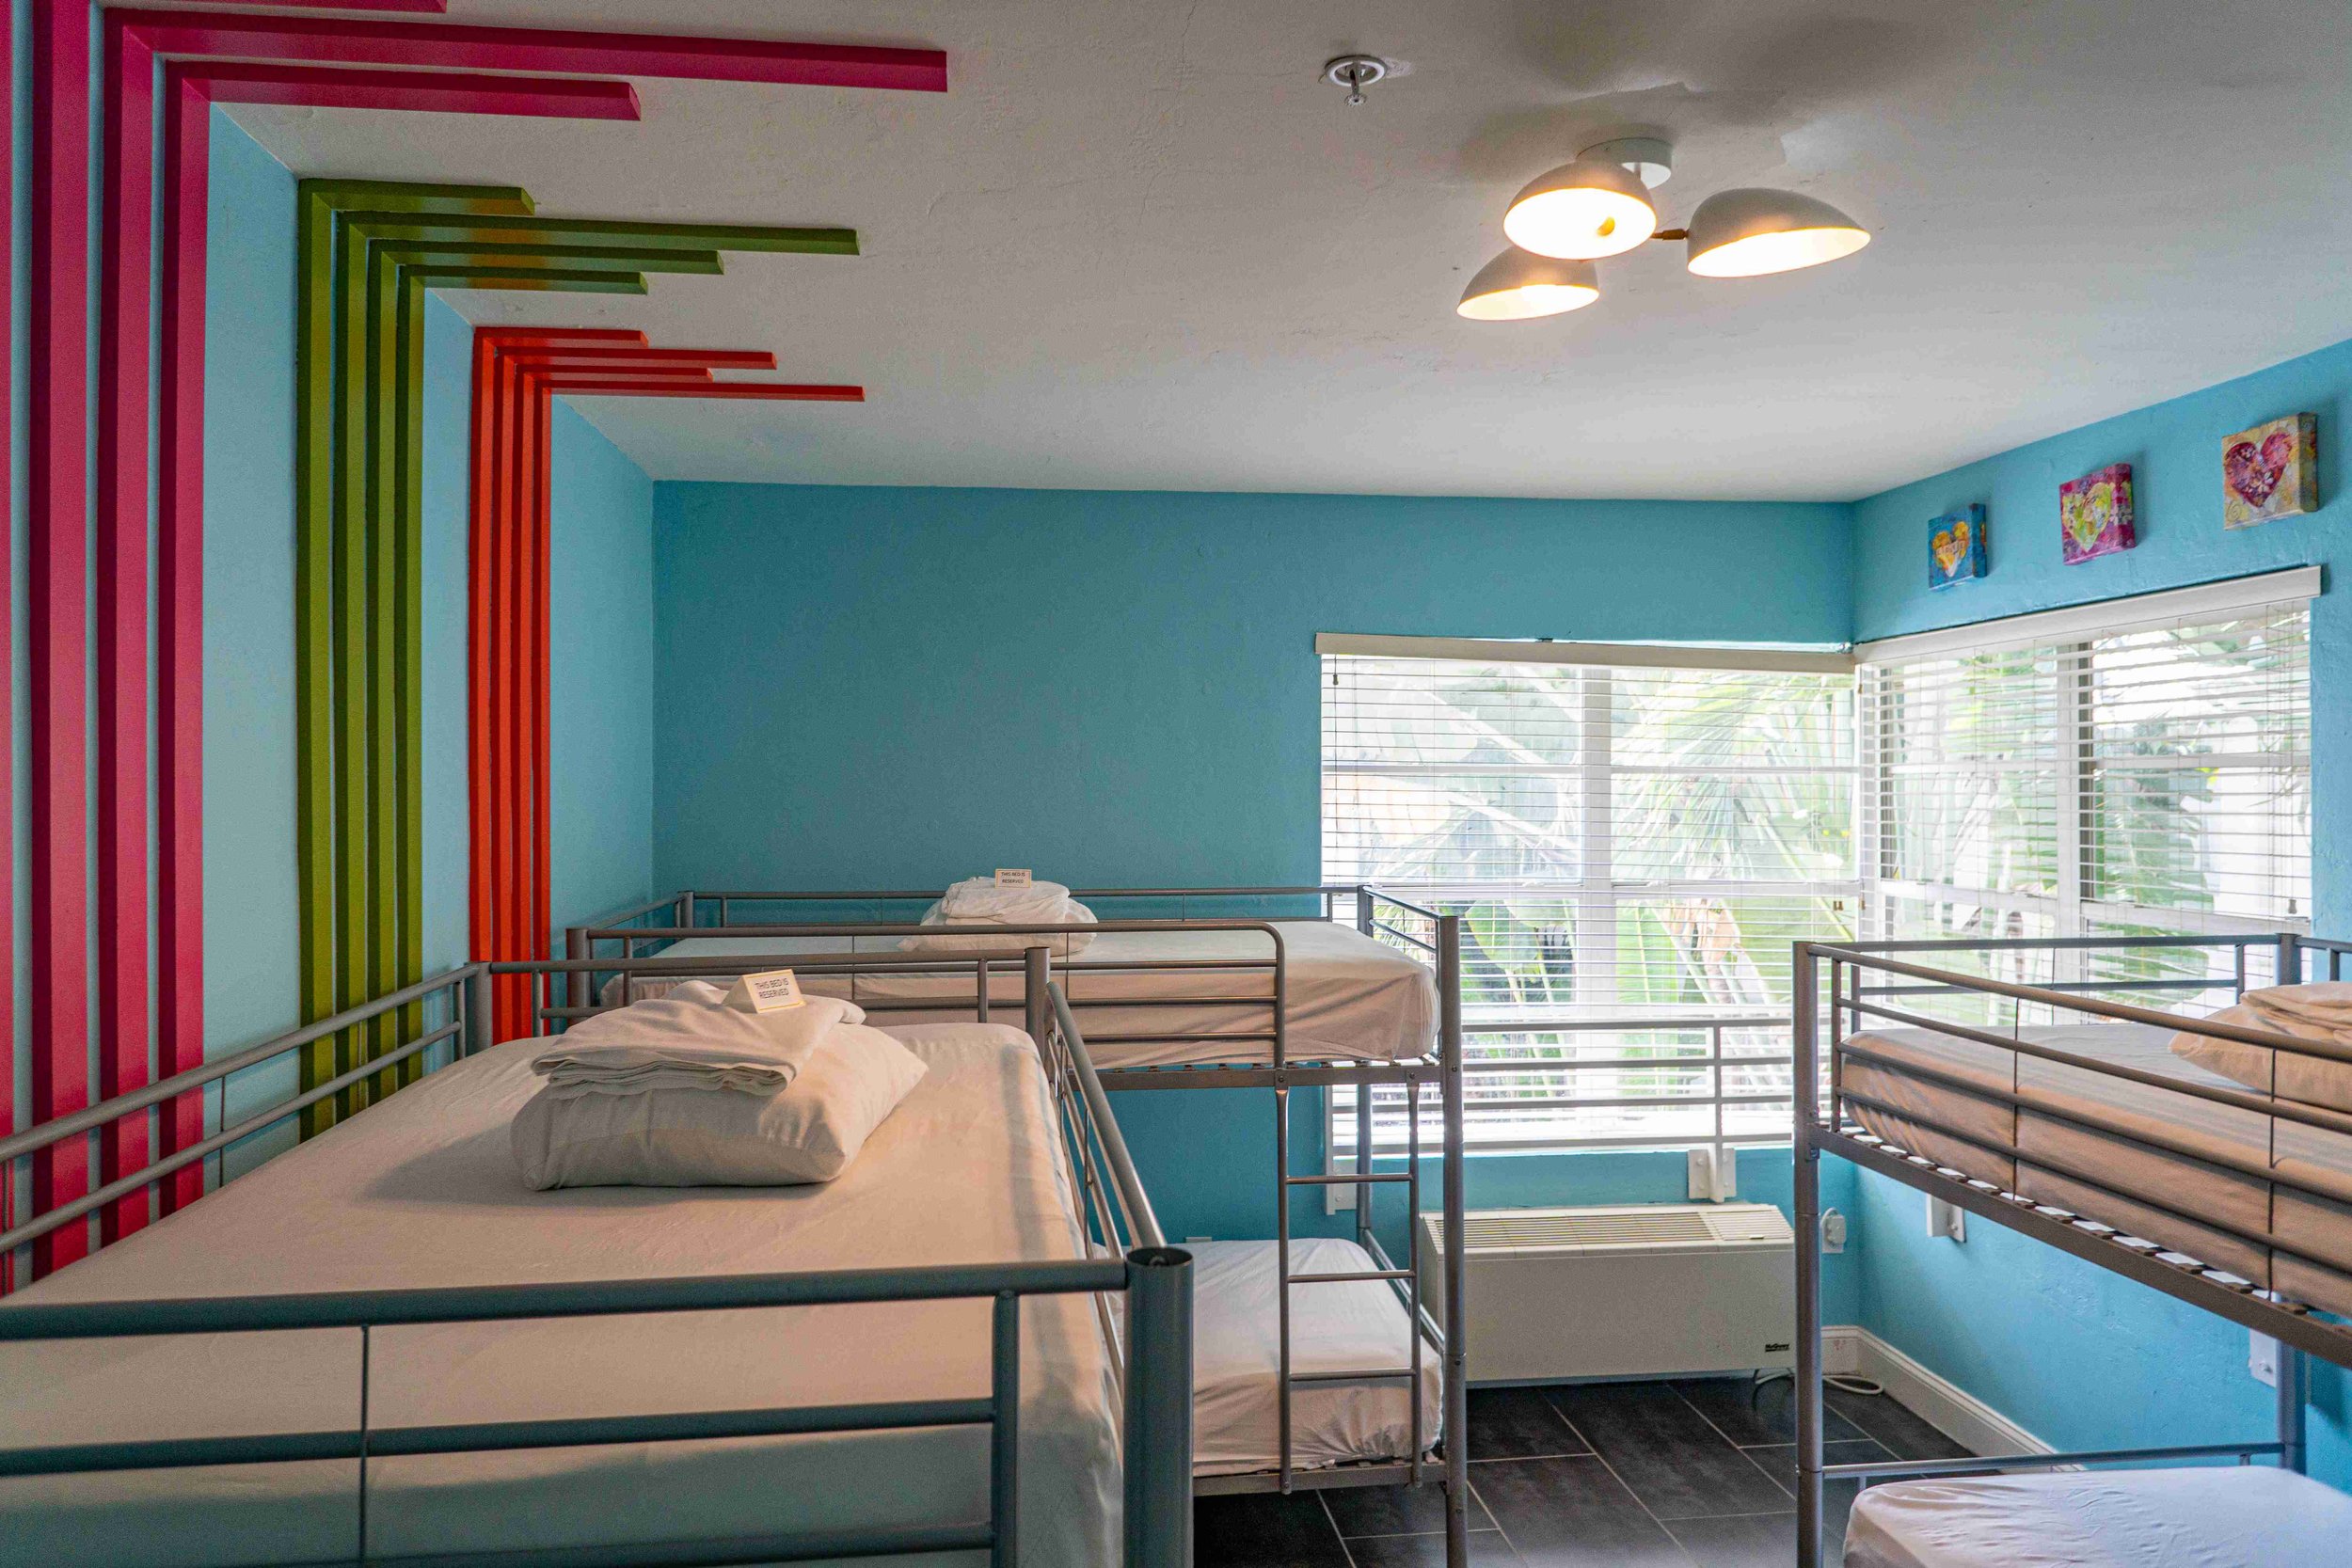 Beds N' Drinks - Miami Beach - Room - Private 8-Bed Room - 5.jpg